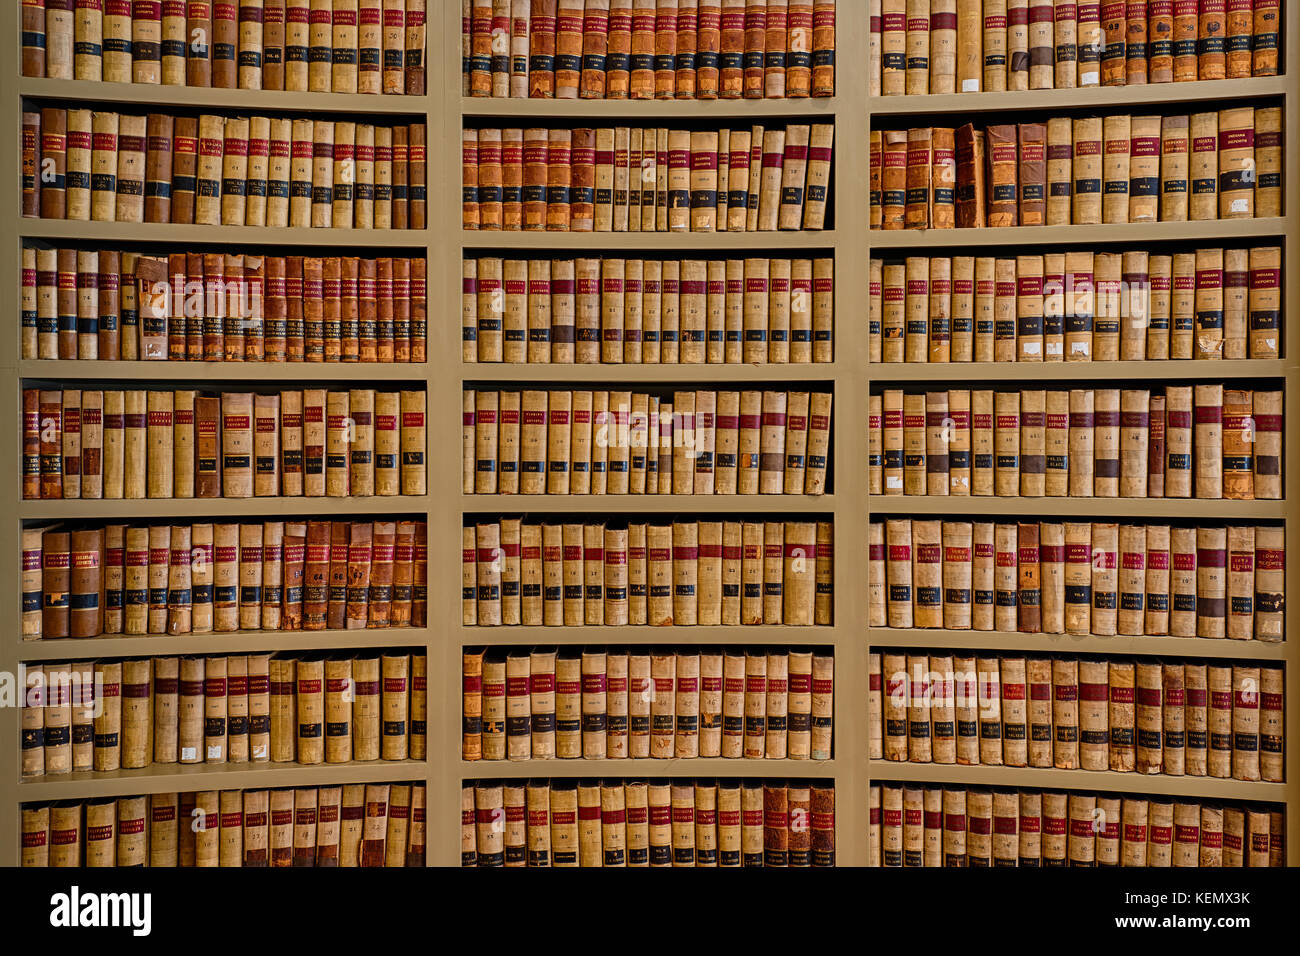 law books wallpaper